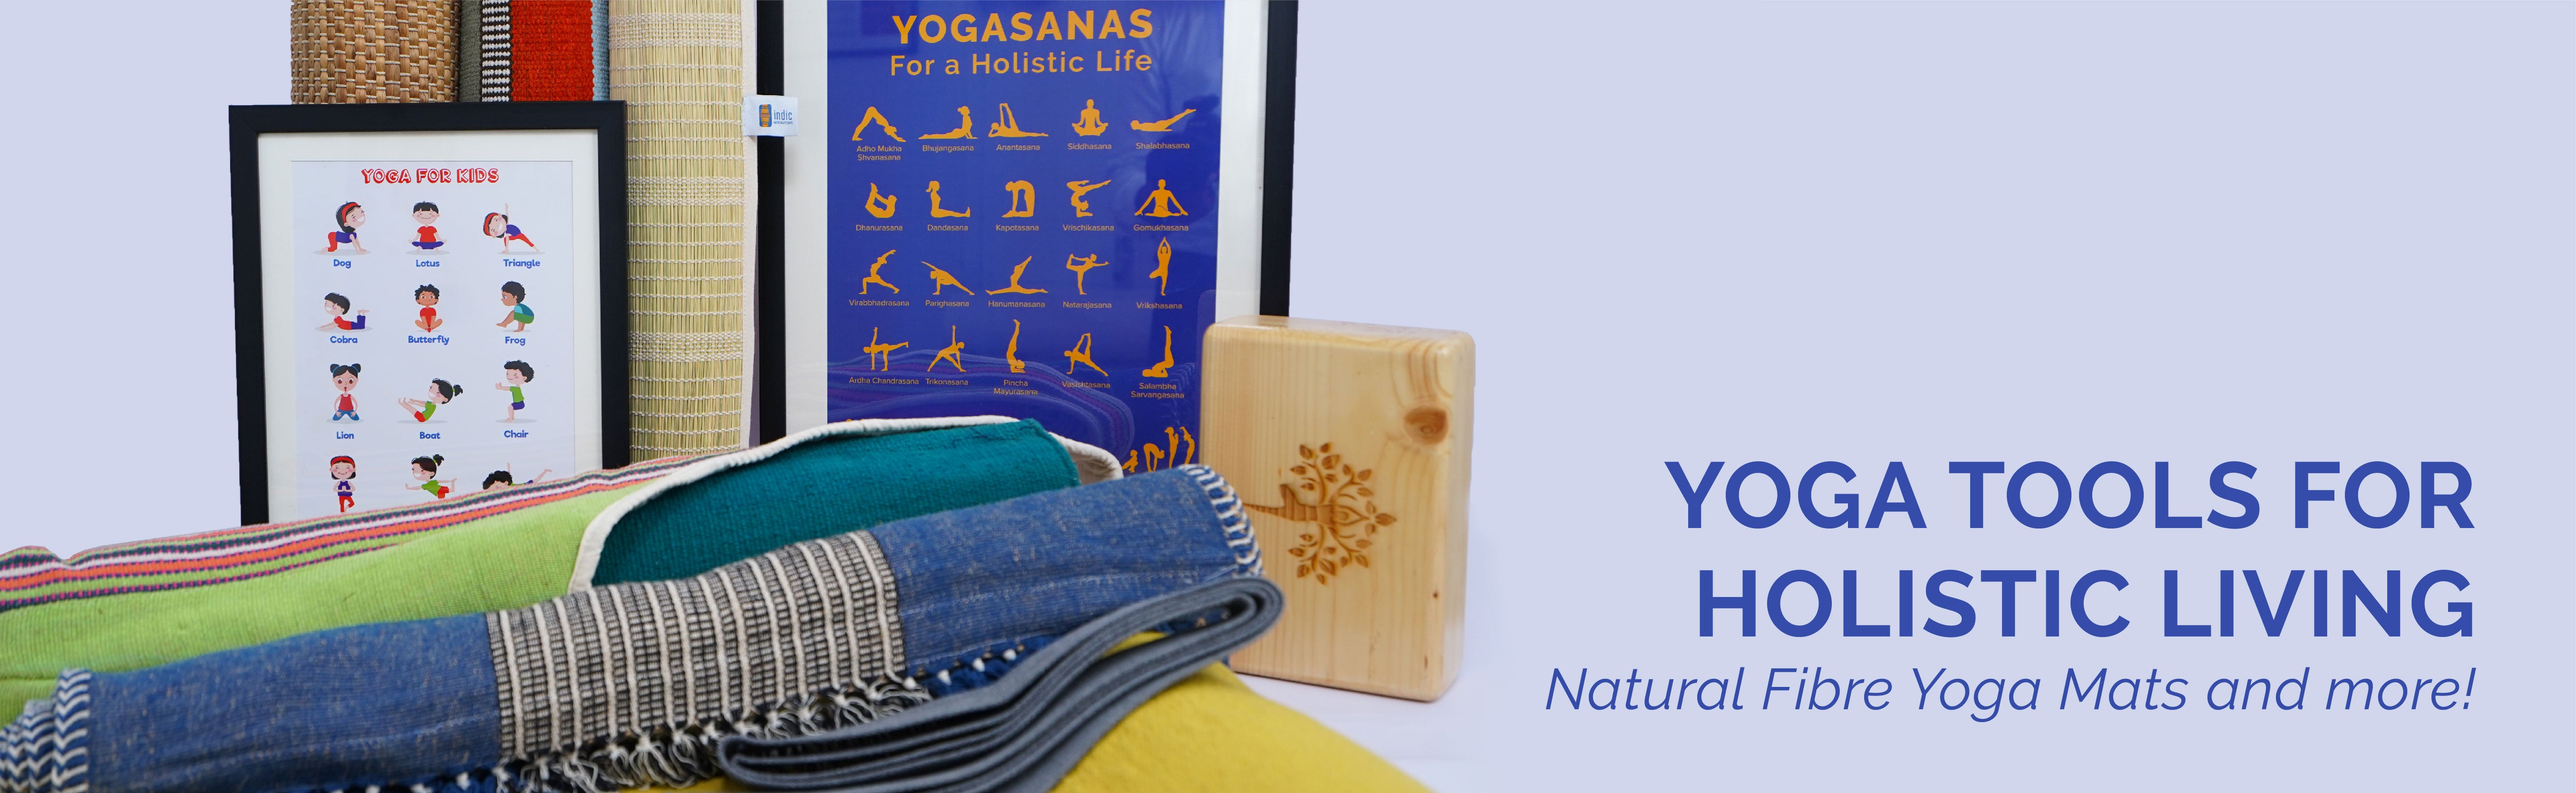 Yoga for Kids, Kids Yoga Mat Blue & Yoga e-Book